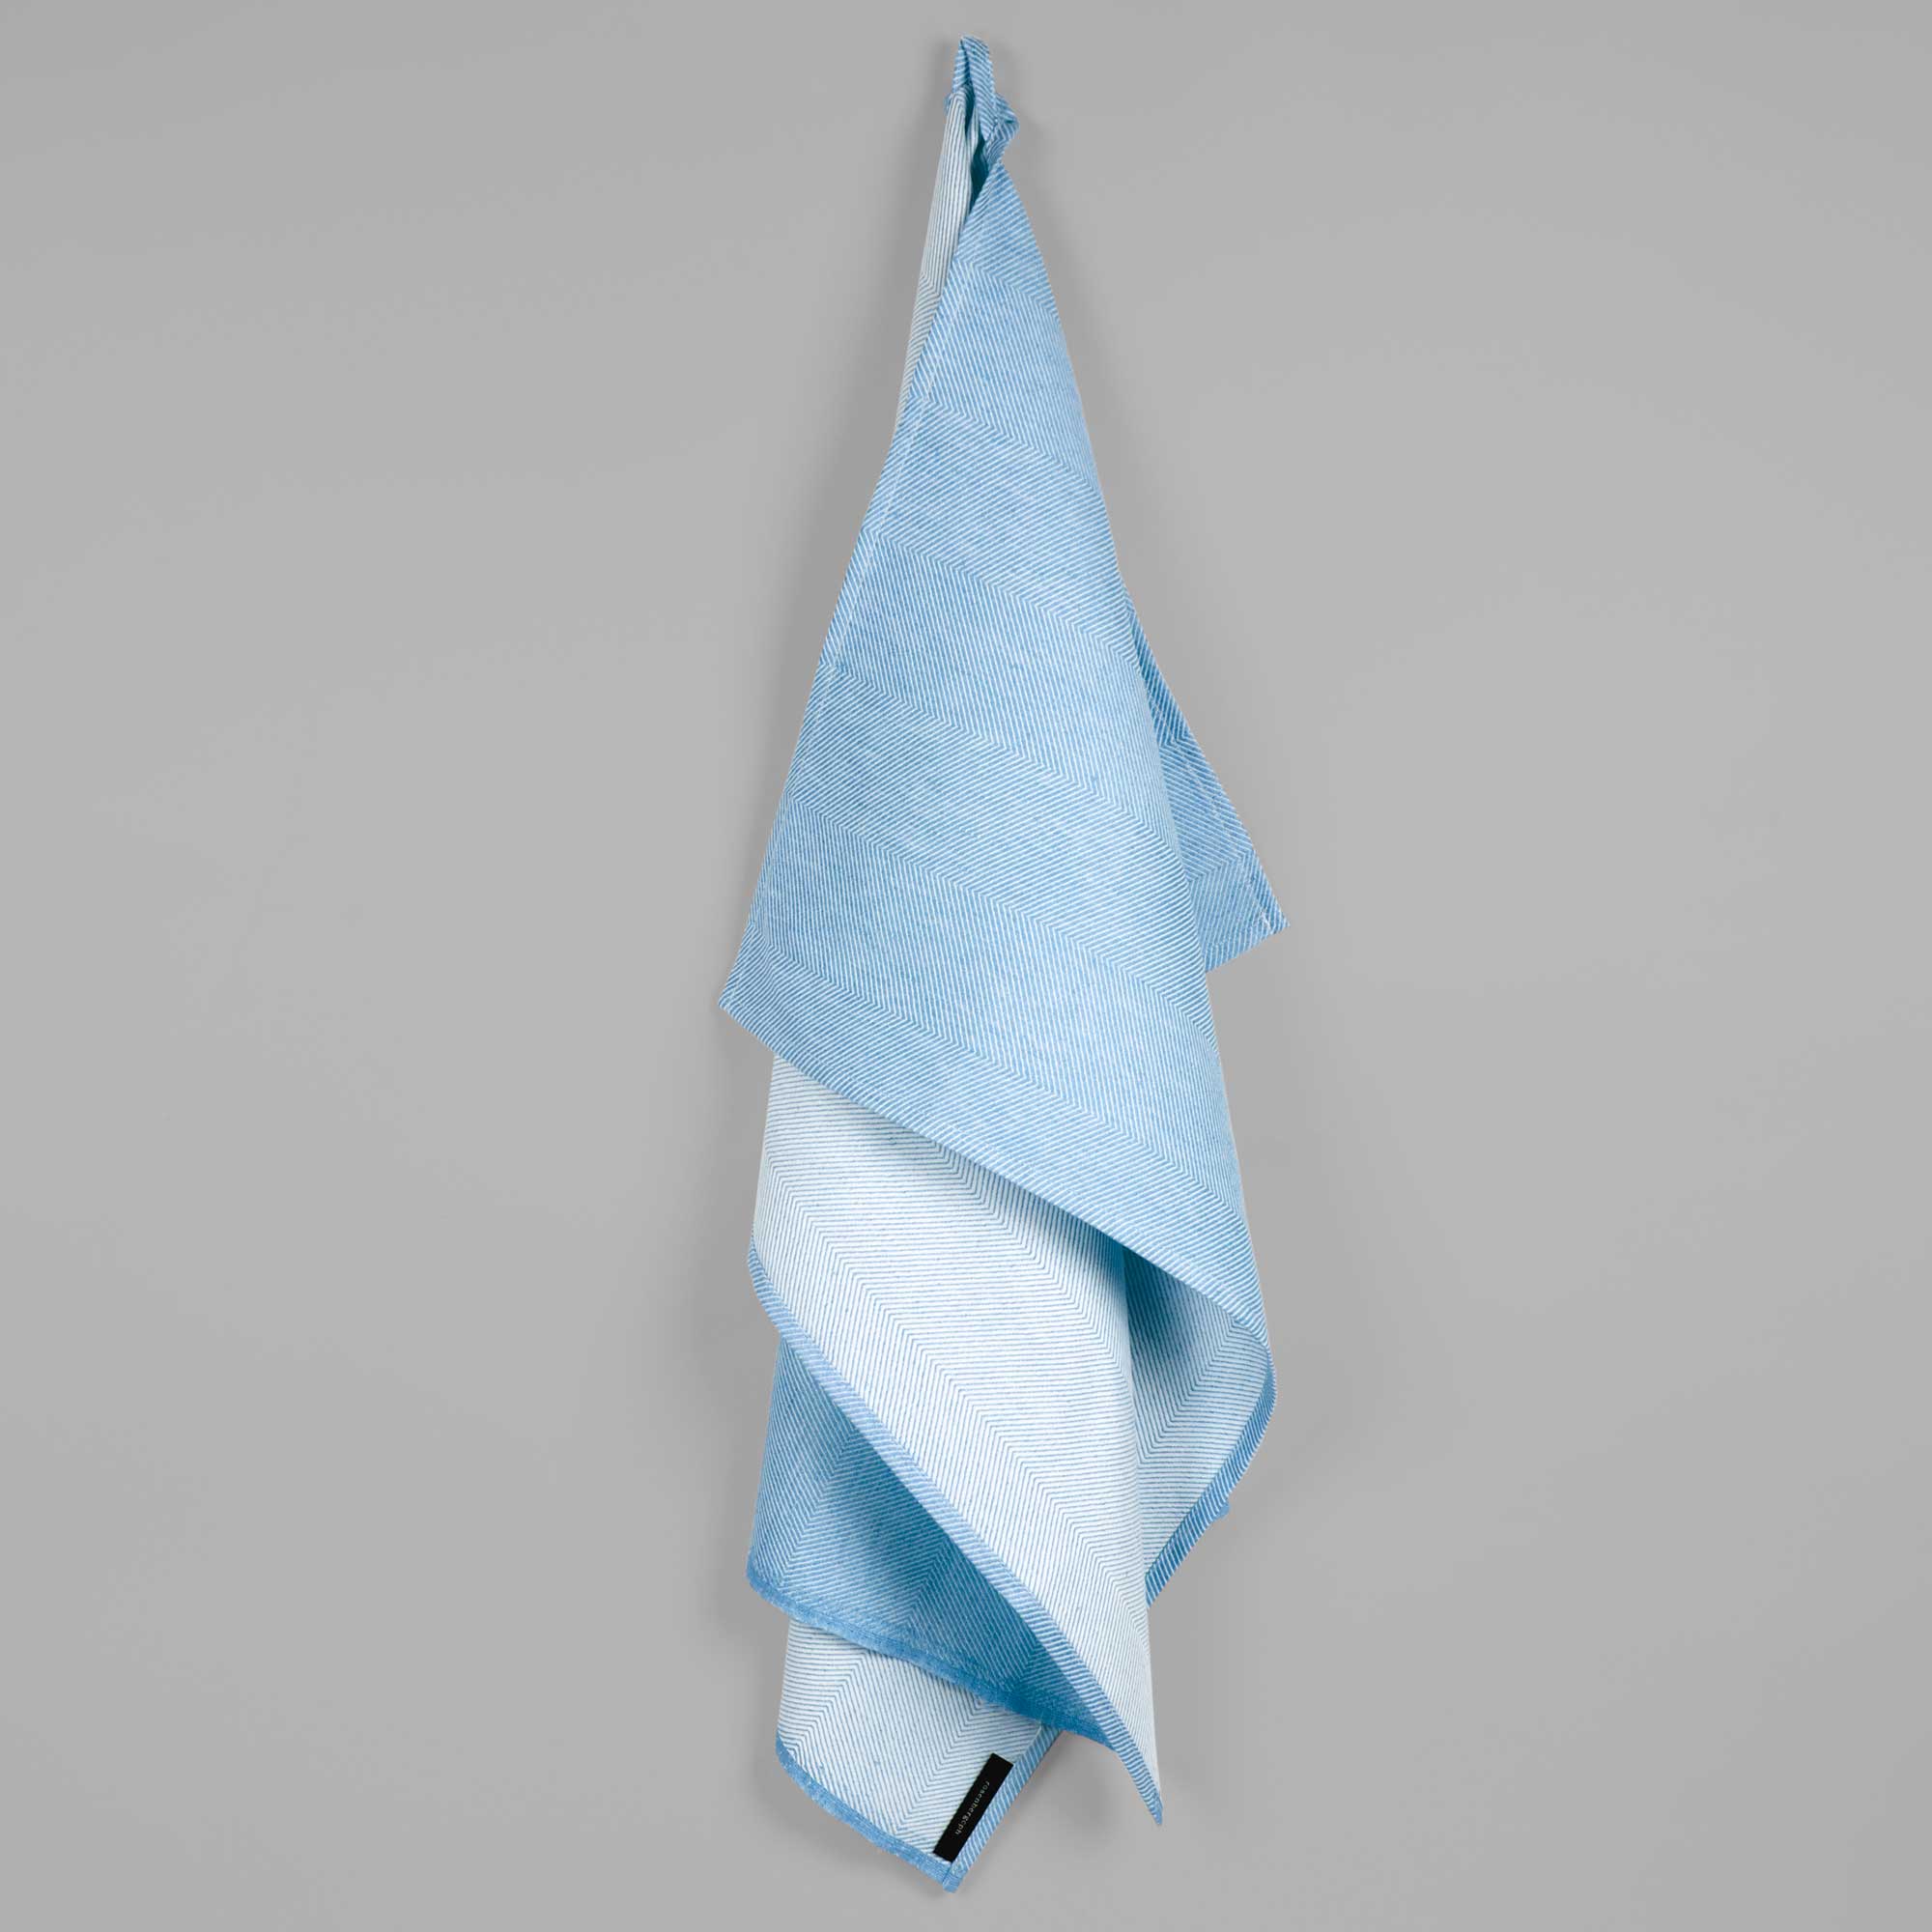 Håndklæde, himmelblå, hør/bomuld, design af Anne Rosenberg, RosenbergCph